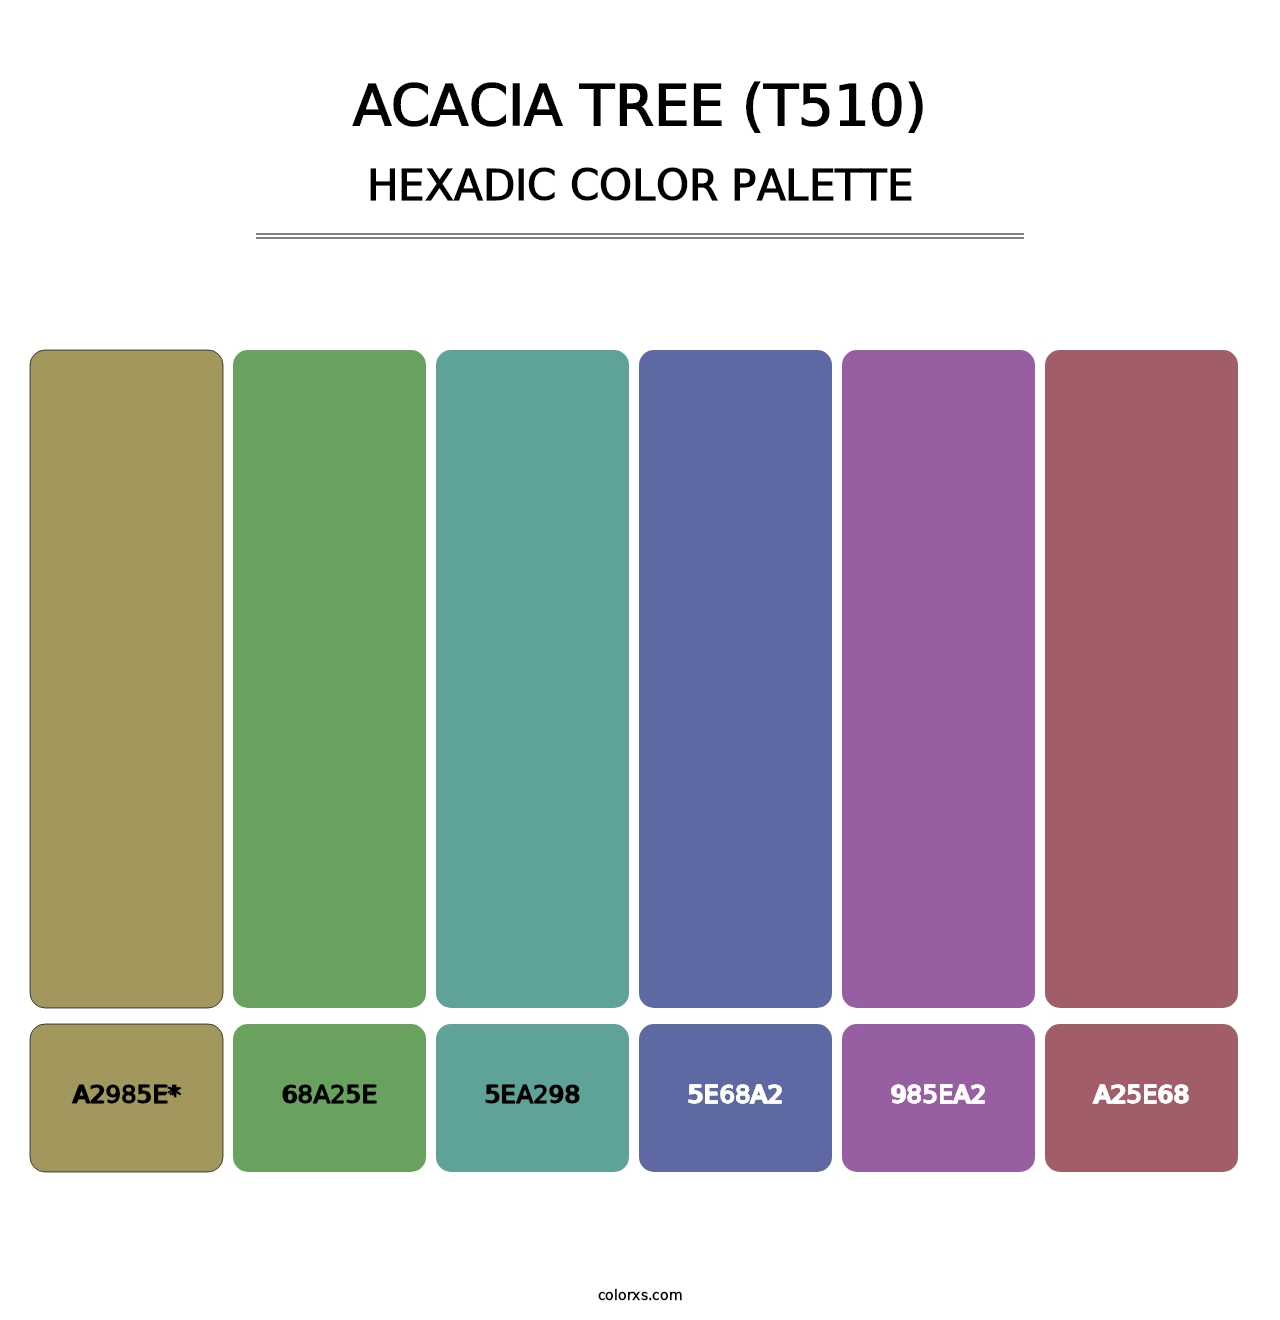 Acacia Tree (T510) - Hexadic Color Palette